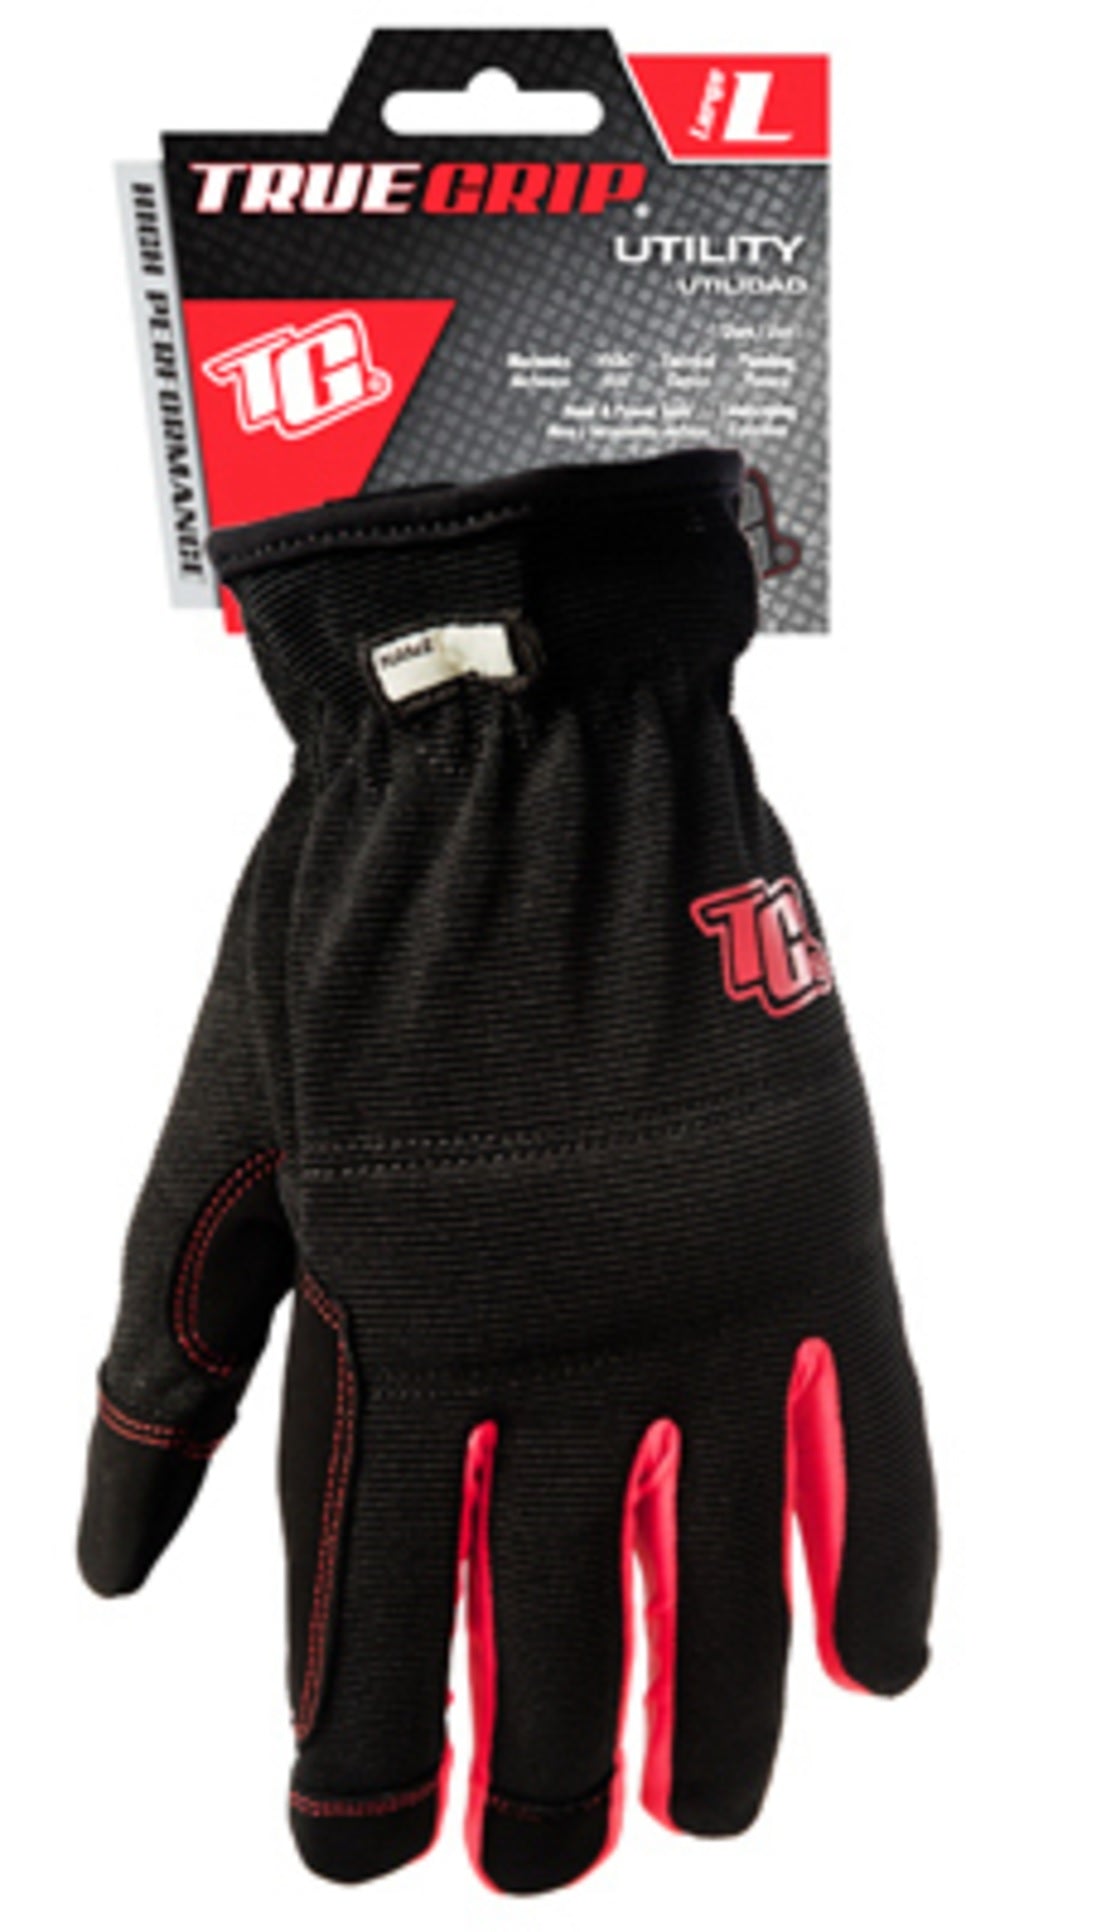 True Grip 90082-23 High Performance Utility Work Glove, Large, Black/Red